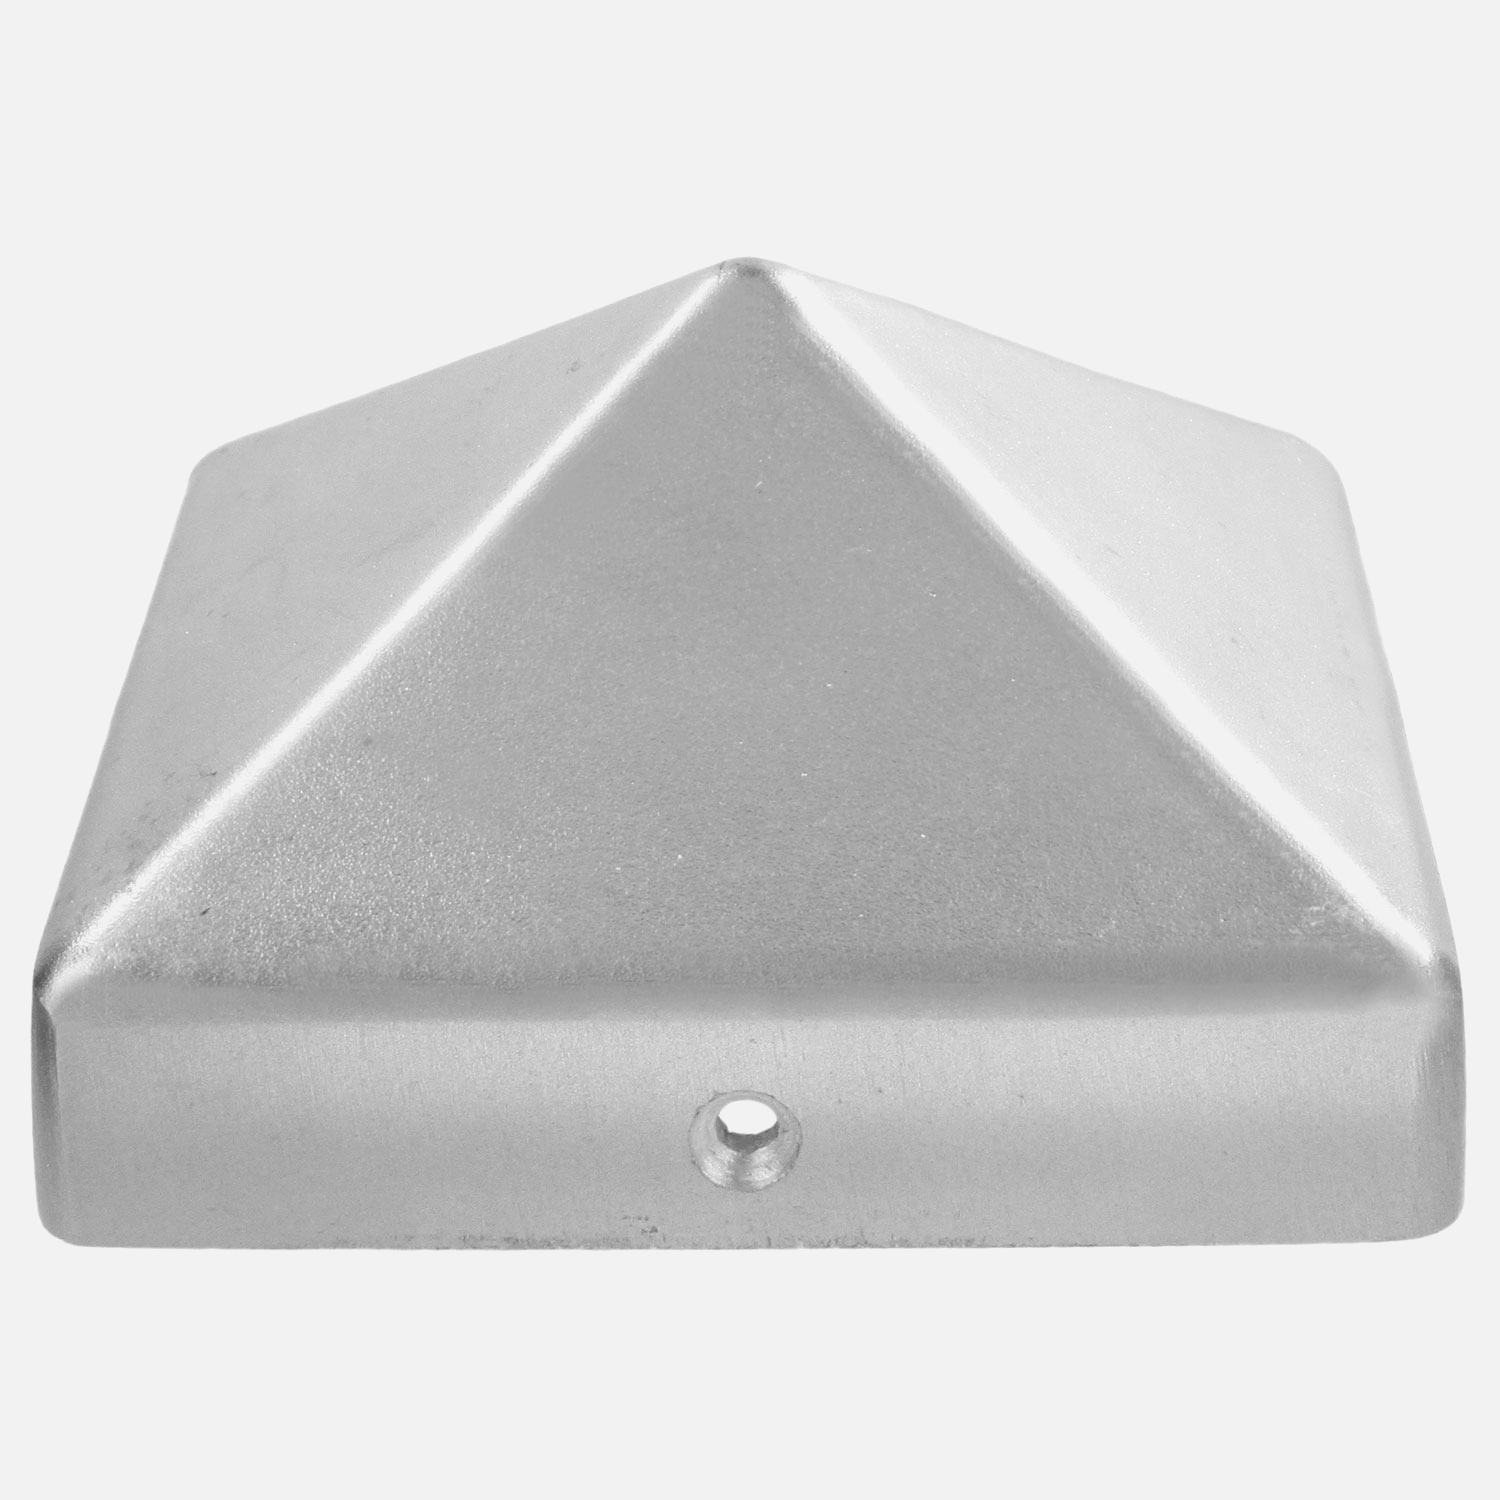 1 Alberts Pfostenkappe hohe Form Aluminiumguss blank 91x91 mm